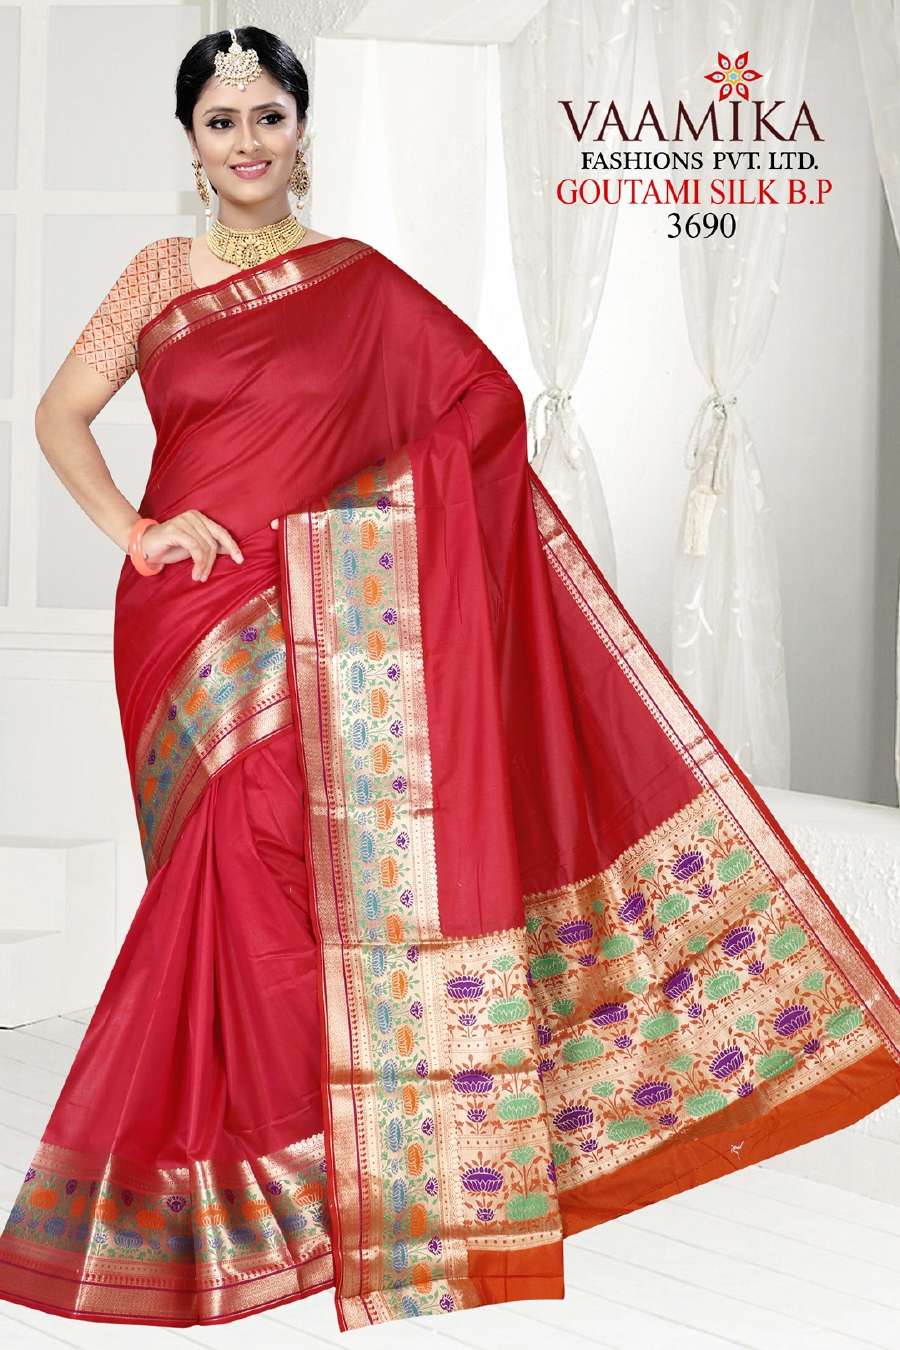 vaamika fashions goutami silk fancy saris wholesaler